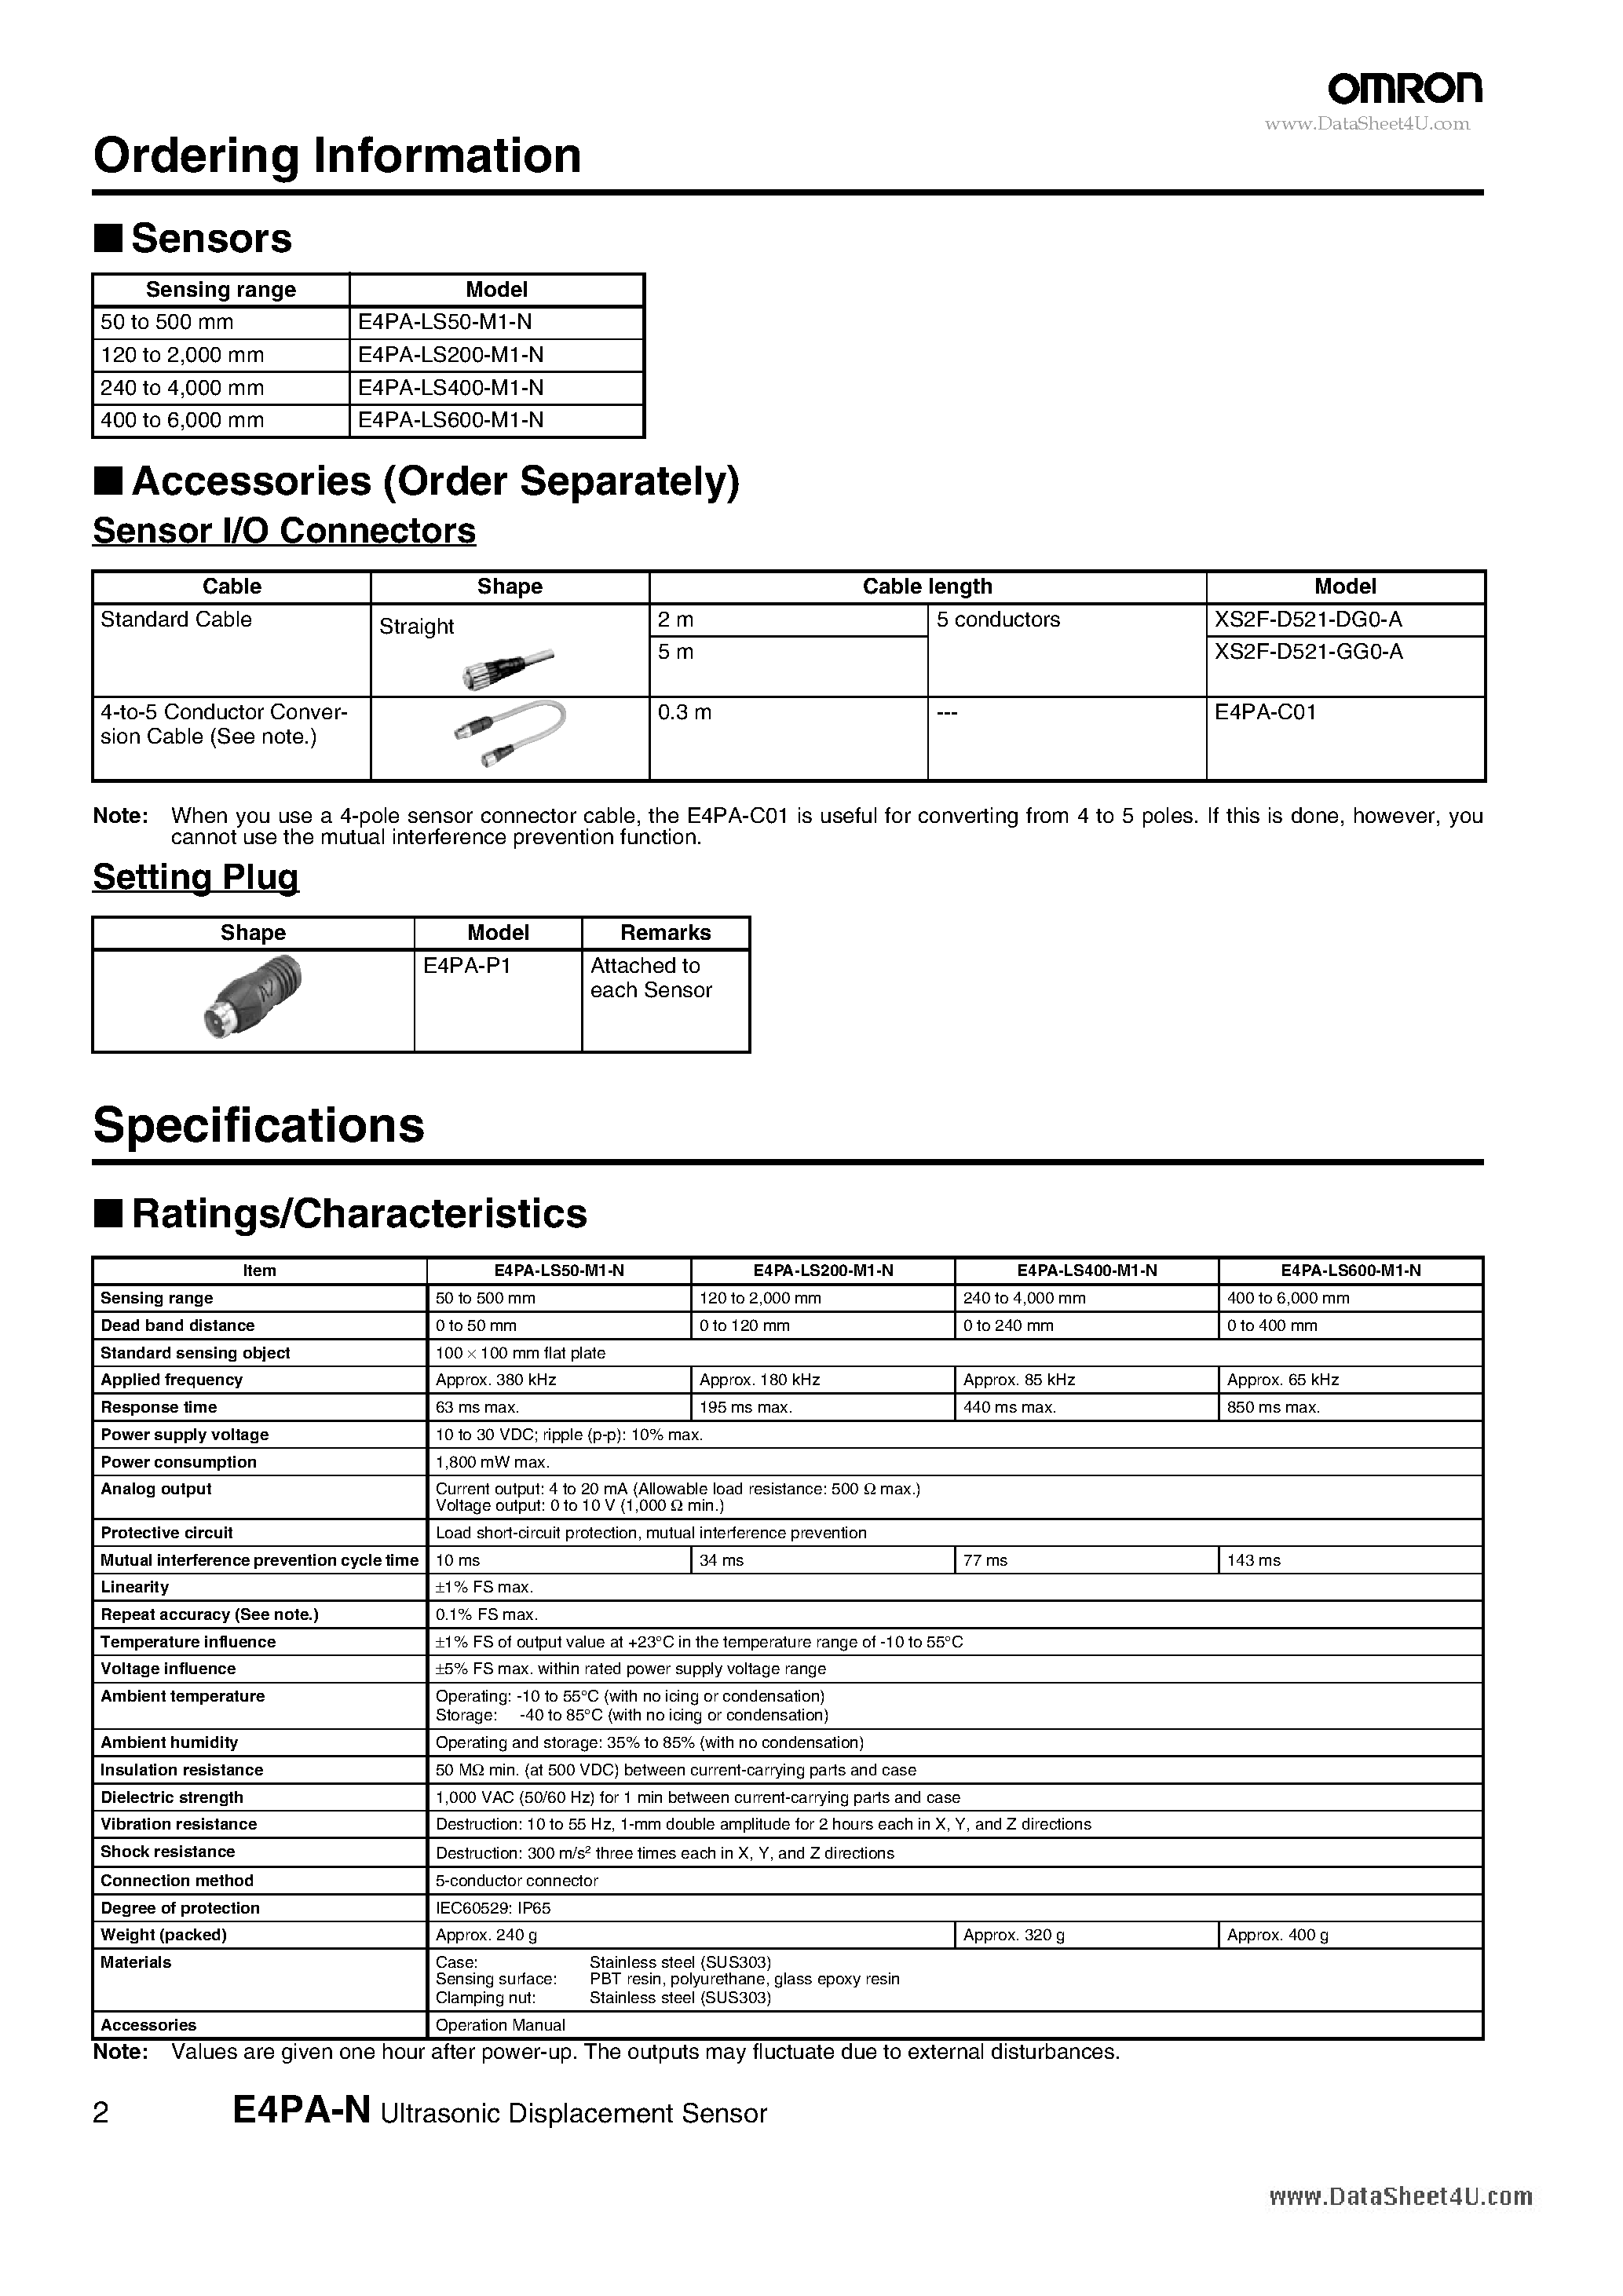 Datasheet E4PA-N - Ultrasonic Displacement Sensor page 2